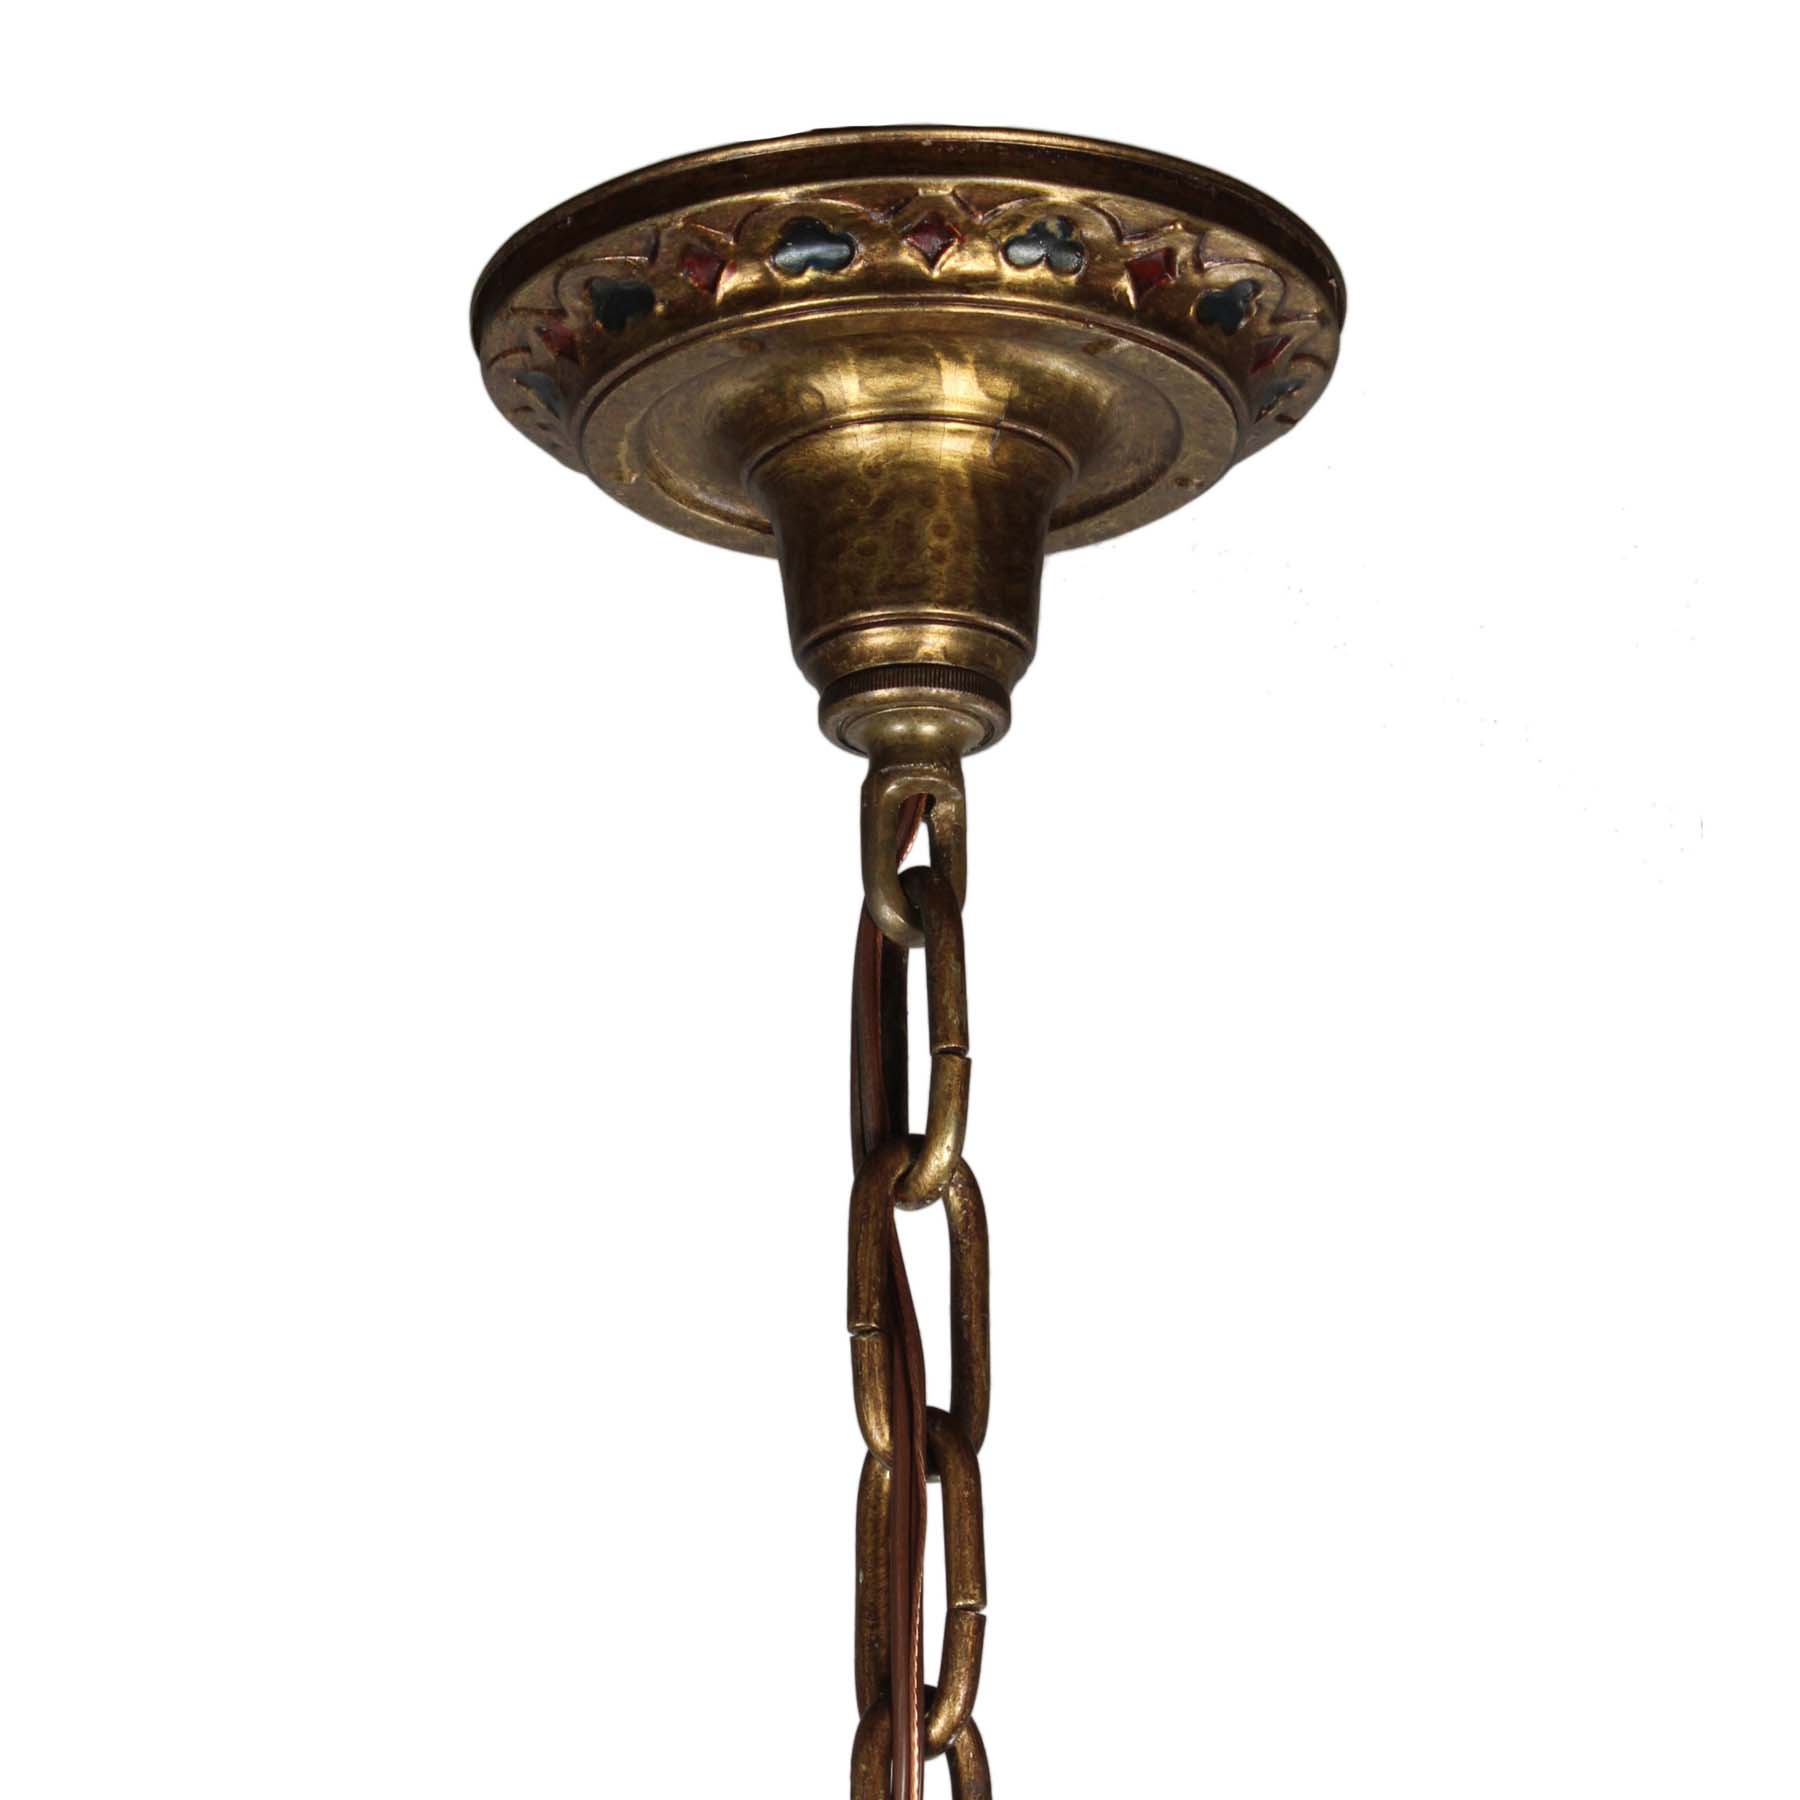 SOLD Antique Bronze Spanish Revival Five-Light Chandelier -69997